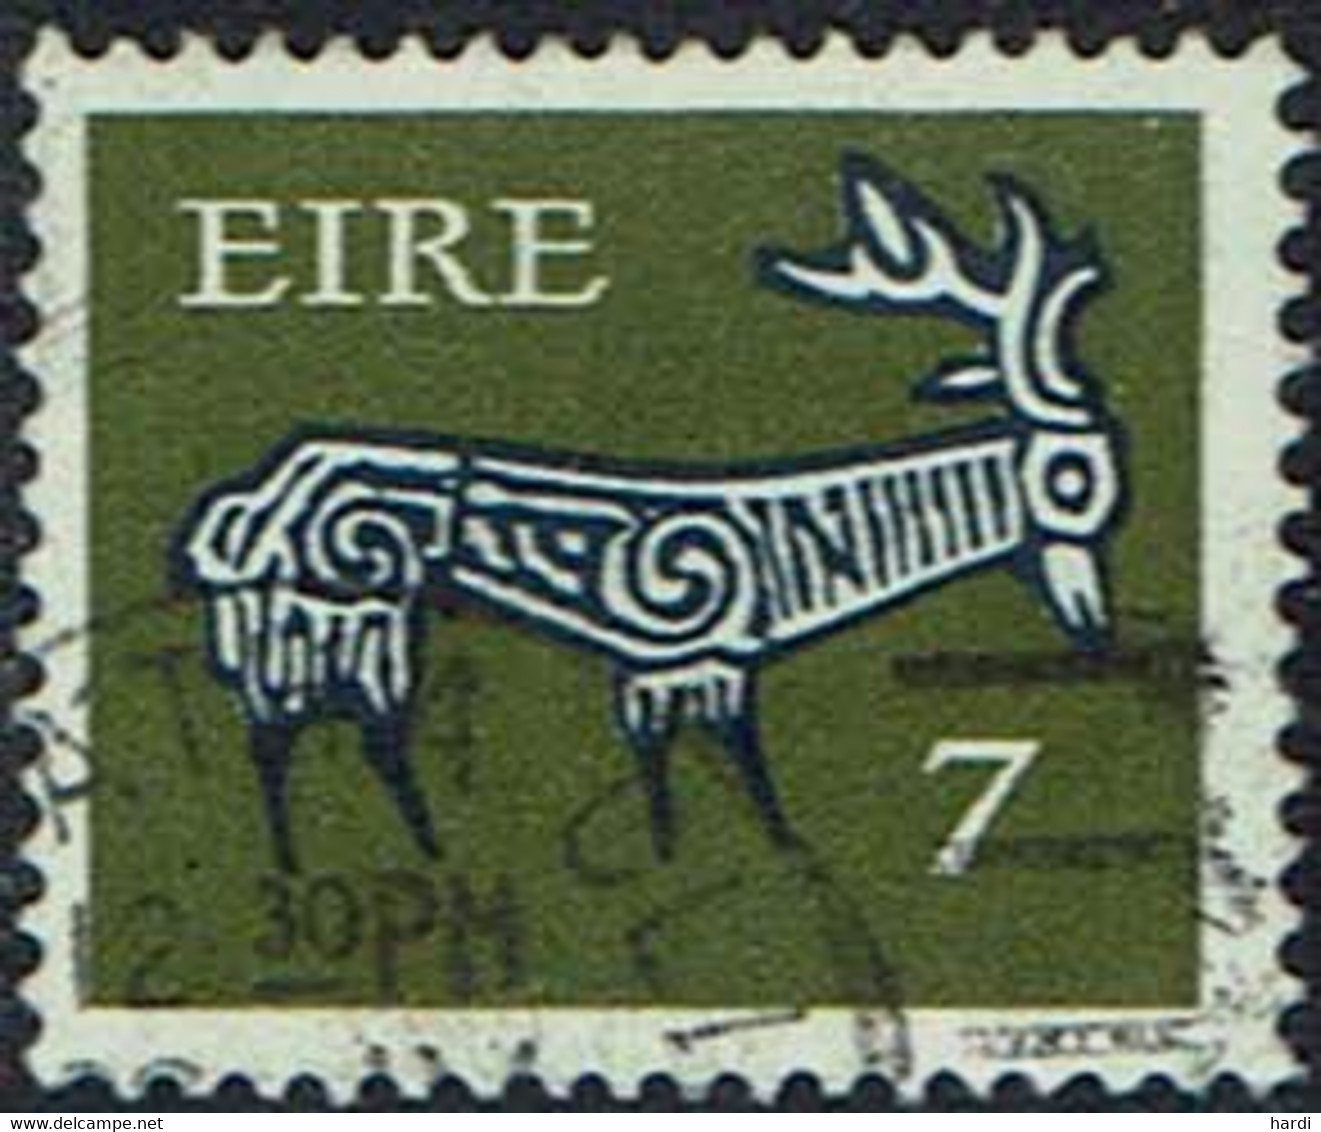 Irland 1968, MiNr 217, Gestempelt - Gebruikt